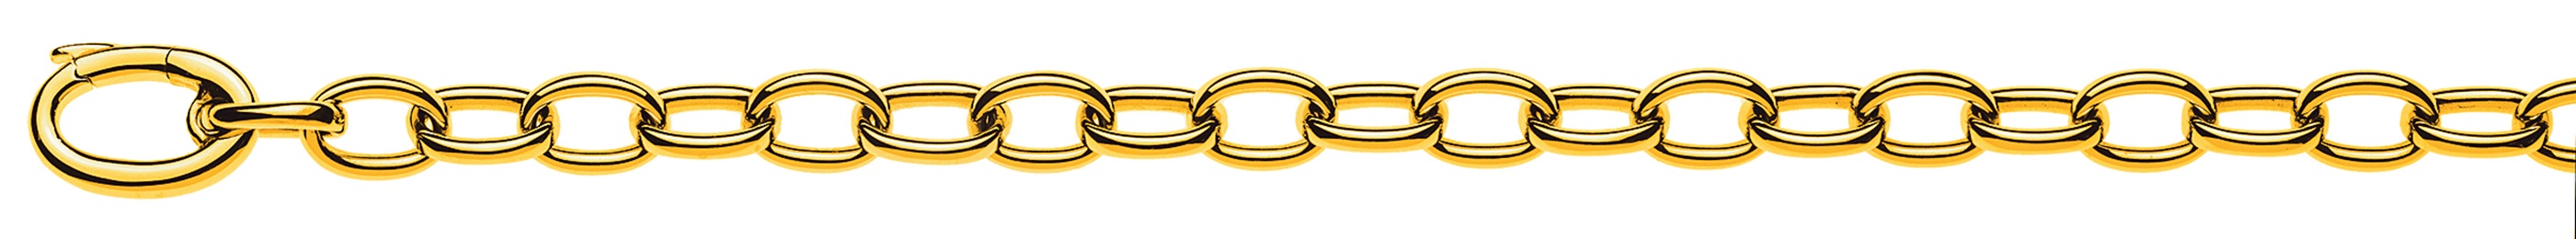 AURONOS Prestige Bracelet Anchor 18K Yellow Gold 20cm